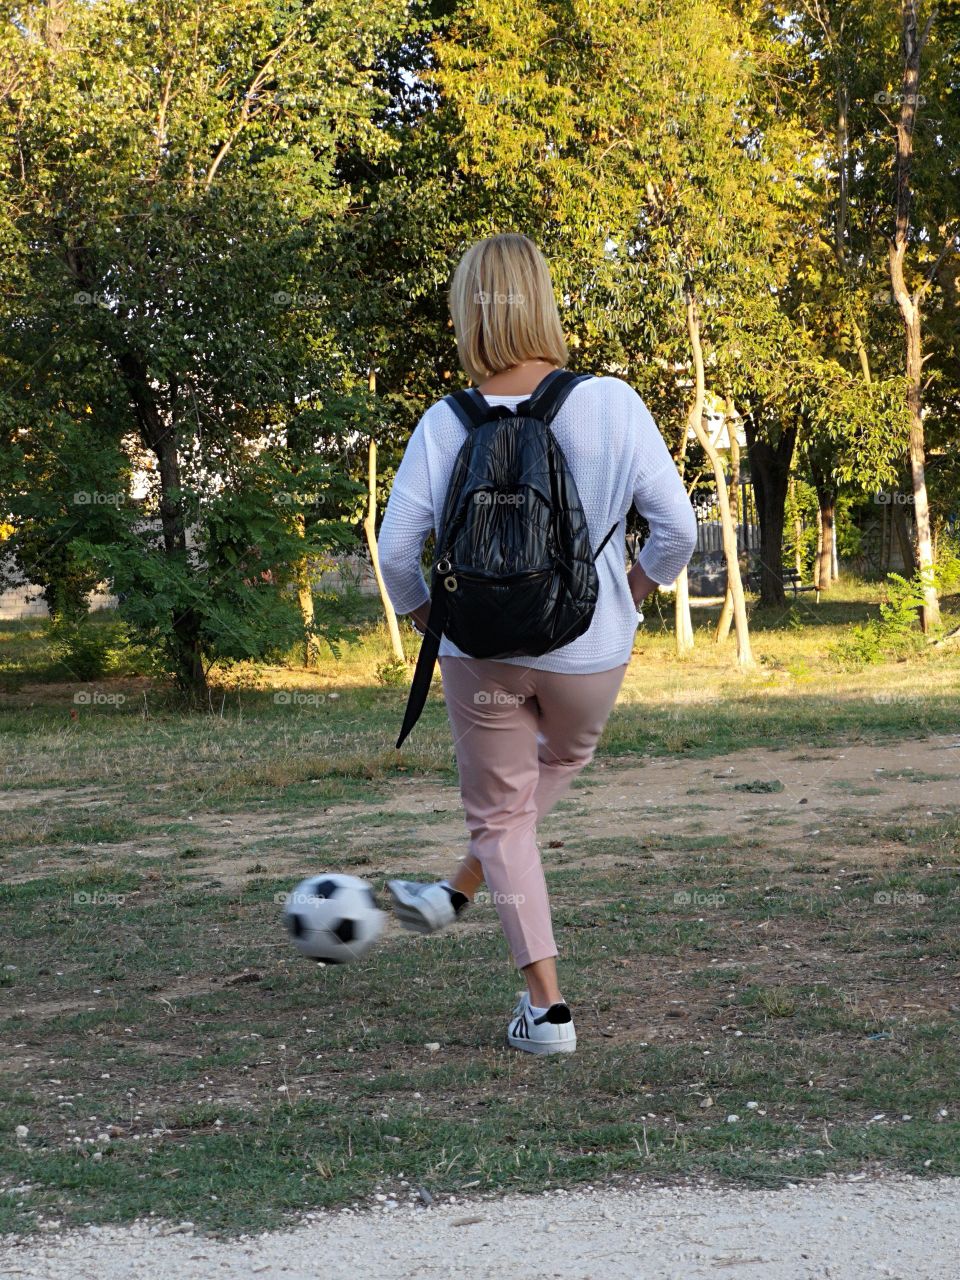 Woman kicking a ball